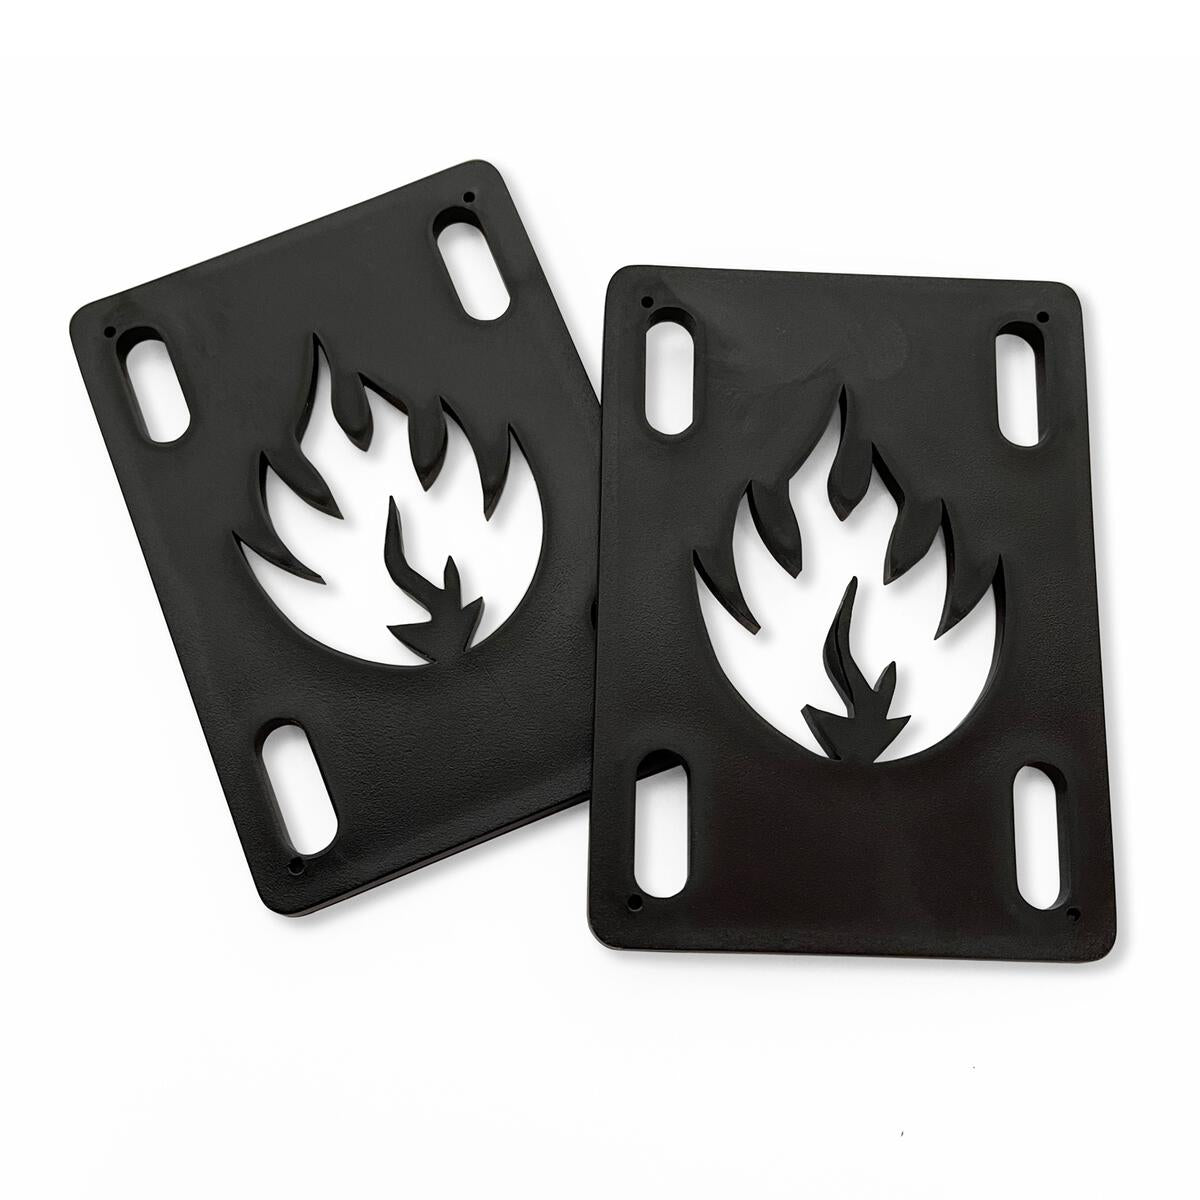 Black Label Flame Hard Riser Pads 1/8"